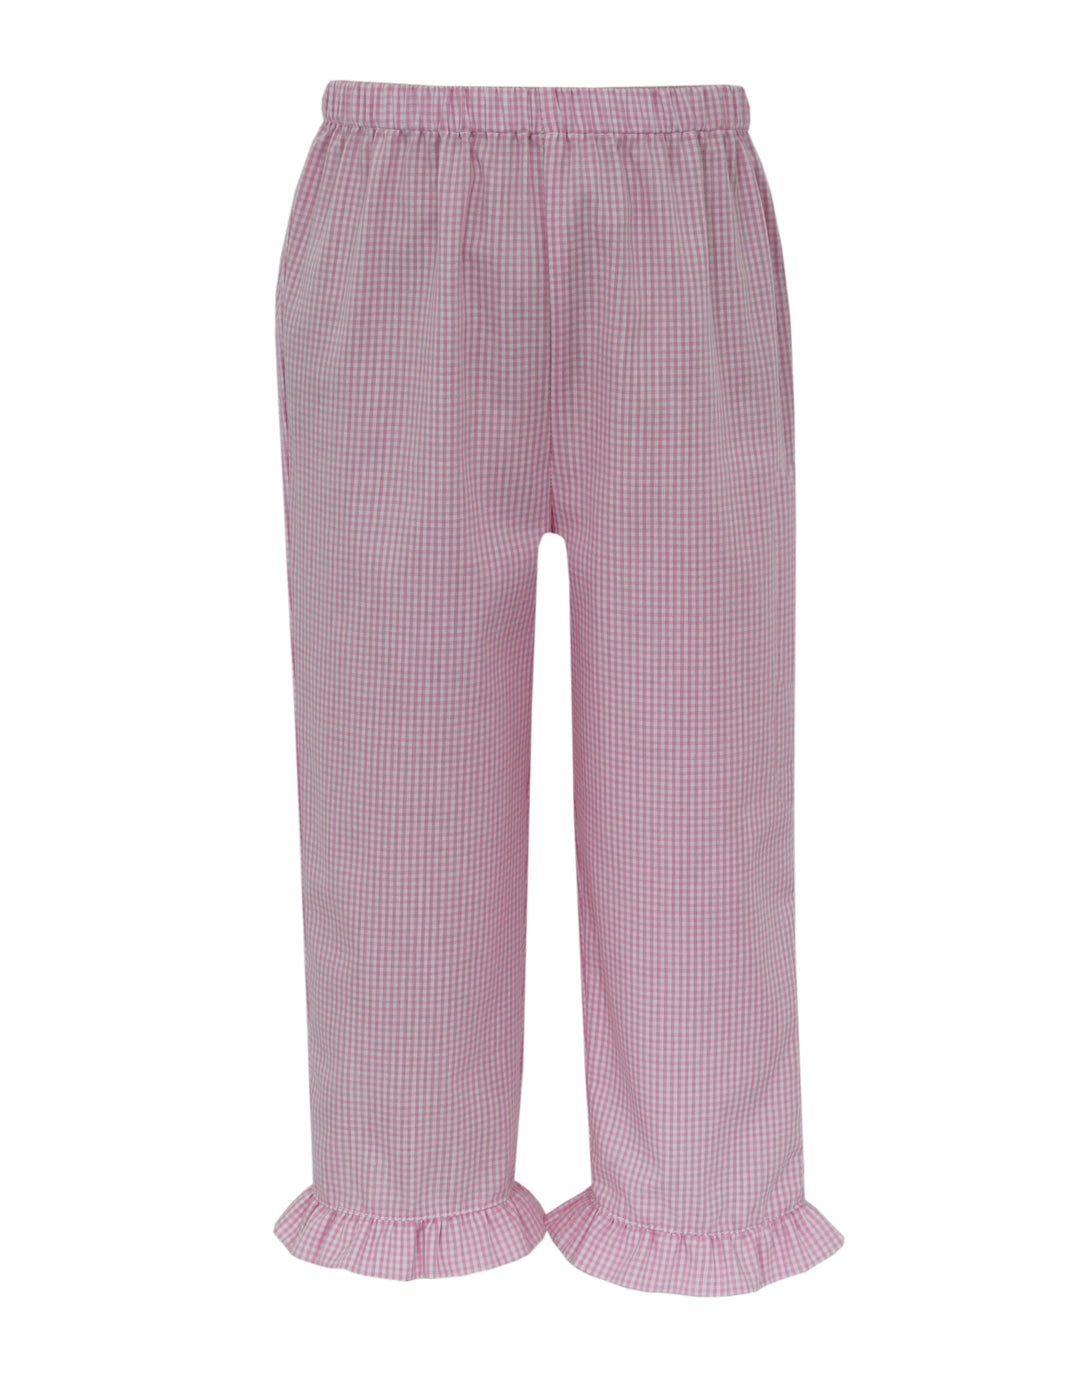 Pink gingham pants